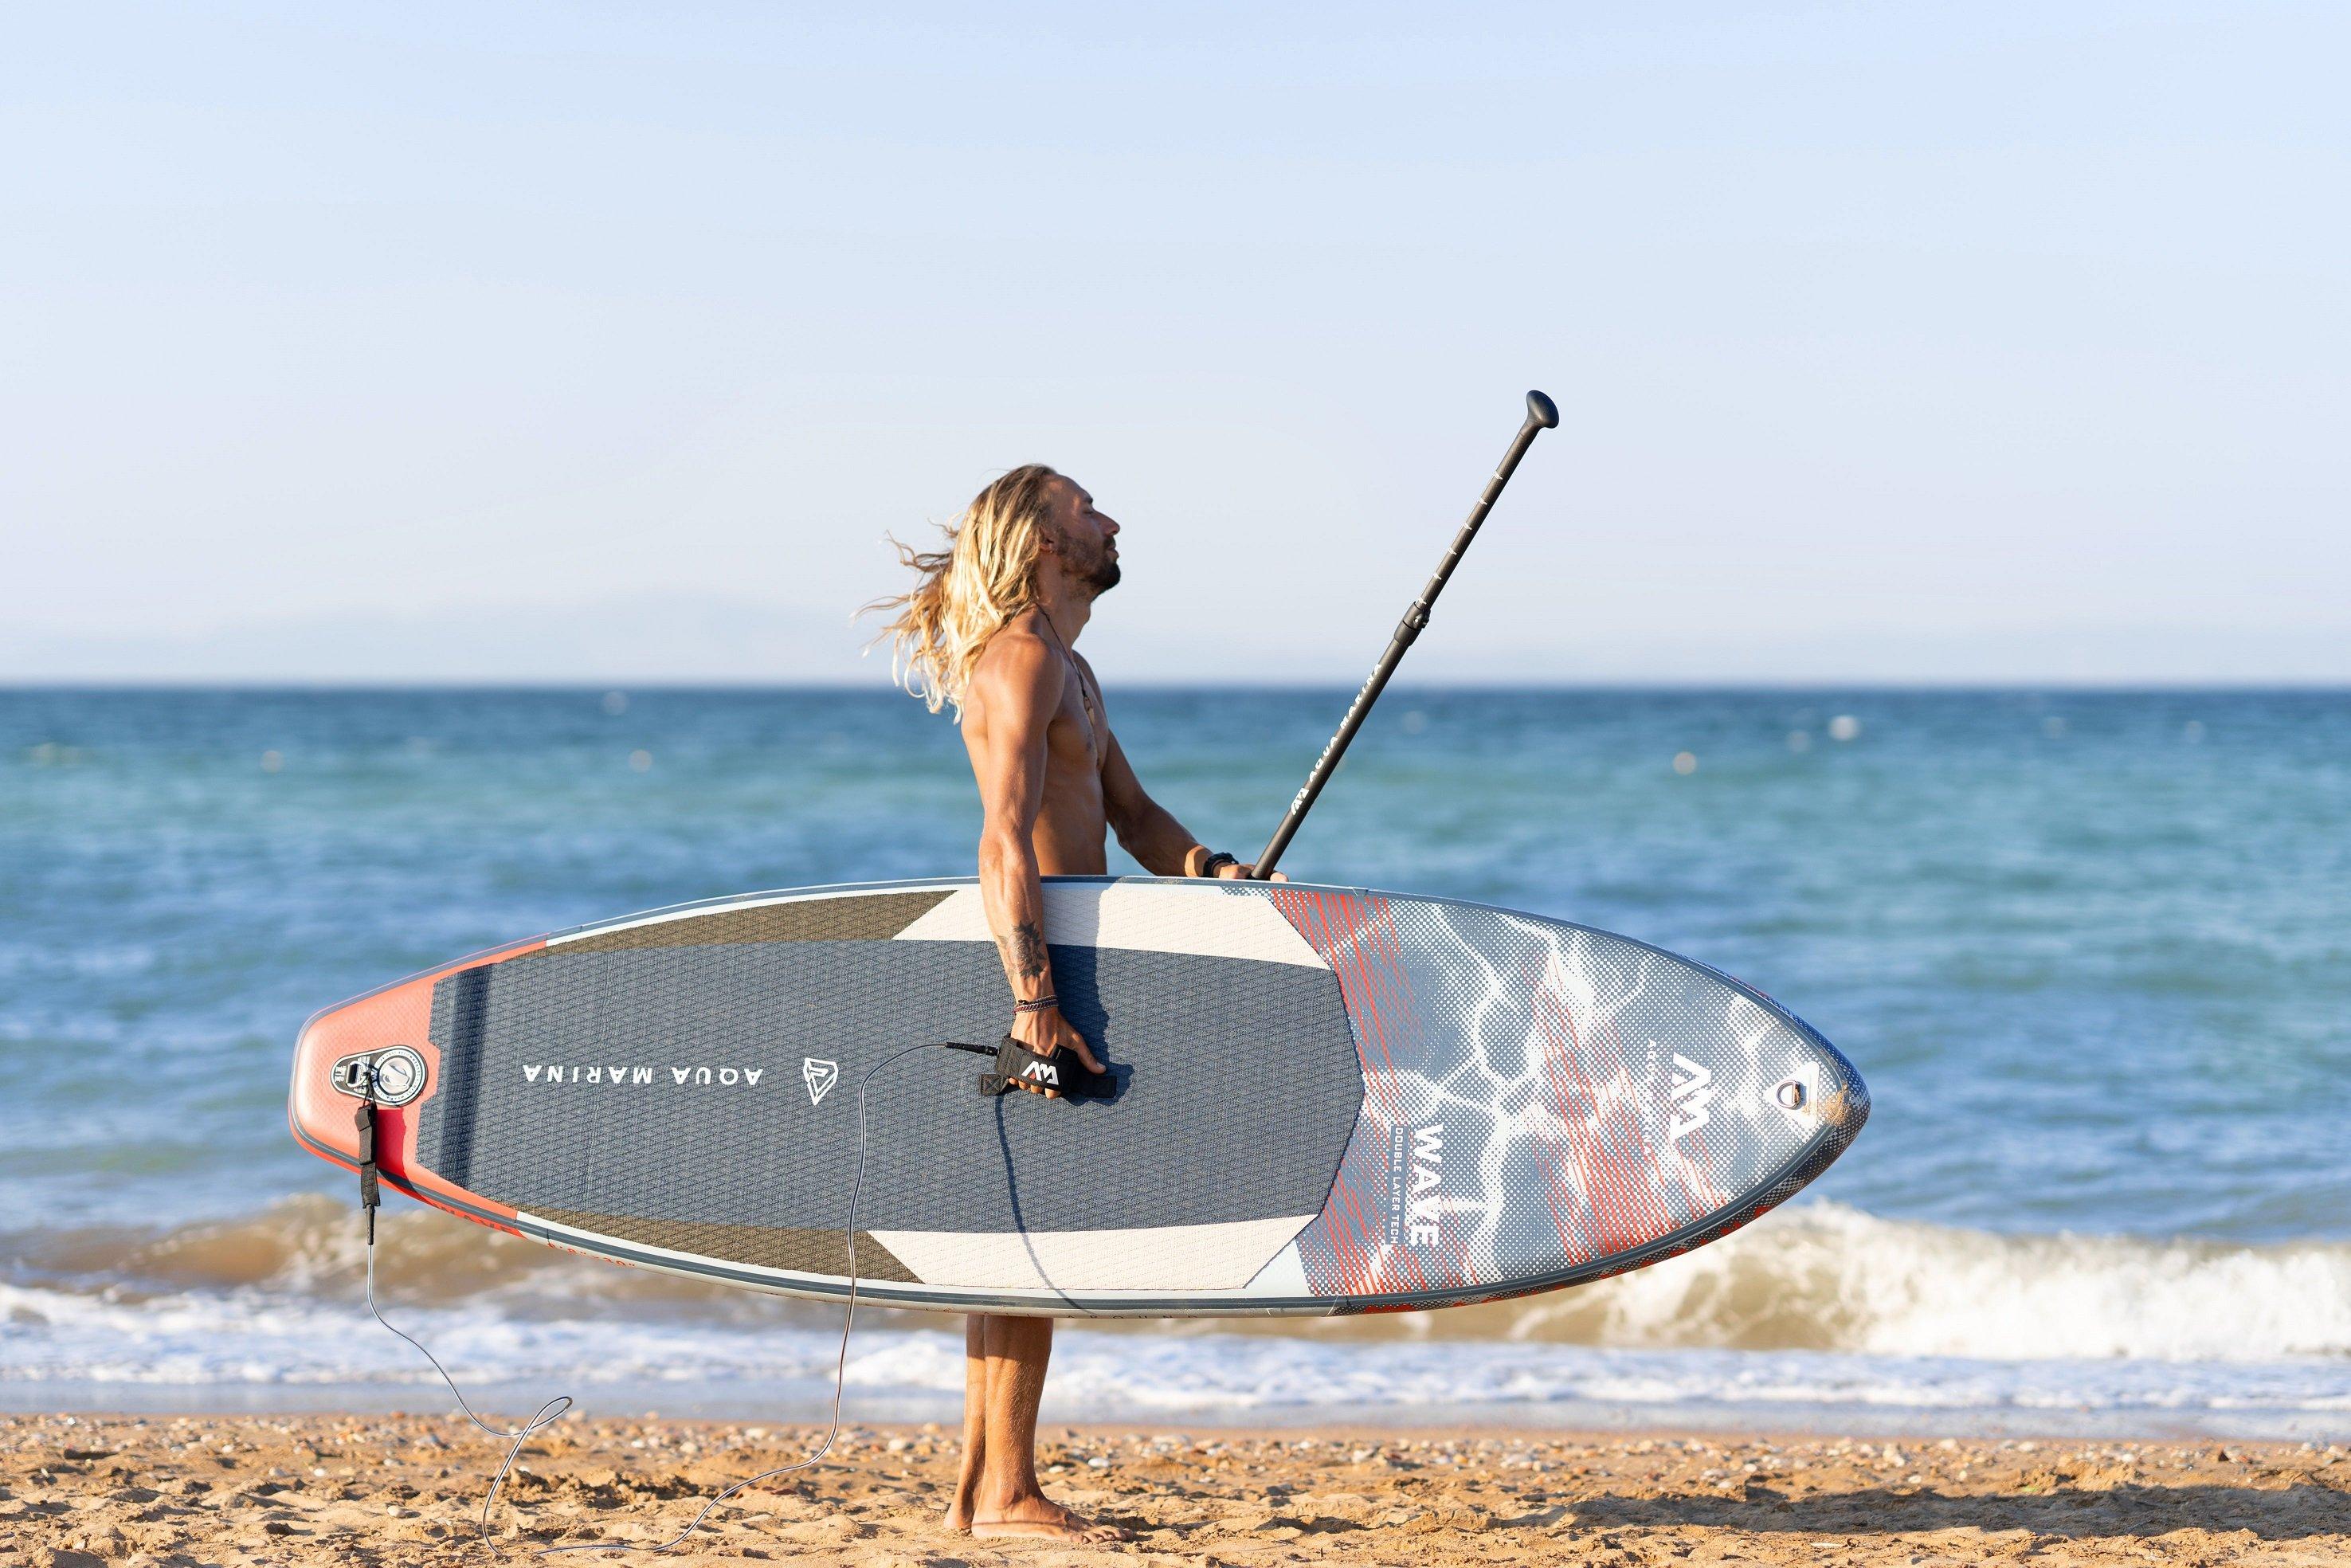 Wave Surf iSUP Paddle Board - Dti Direct USA